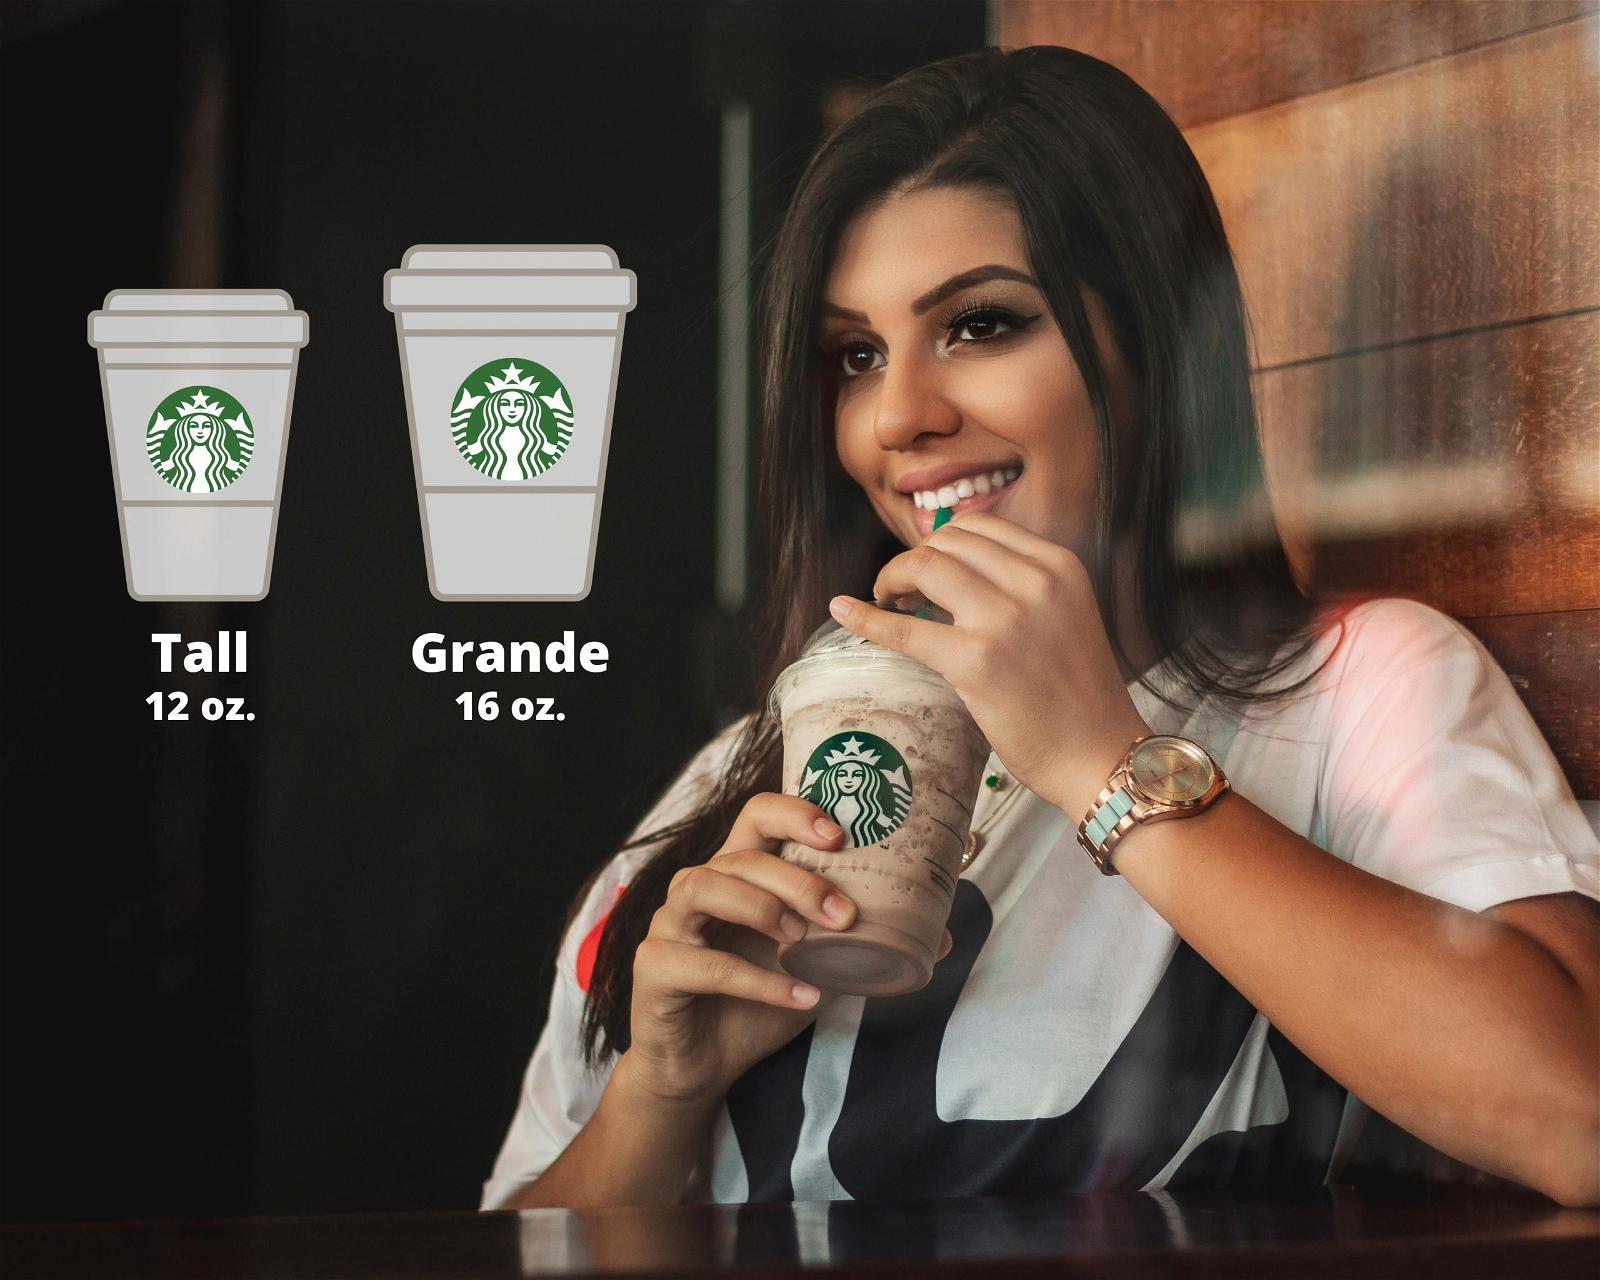 Starbucks Tall vs Grande: Which One Should I Order?